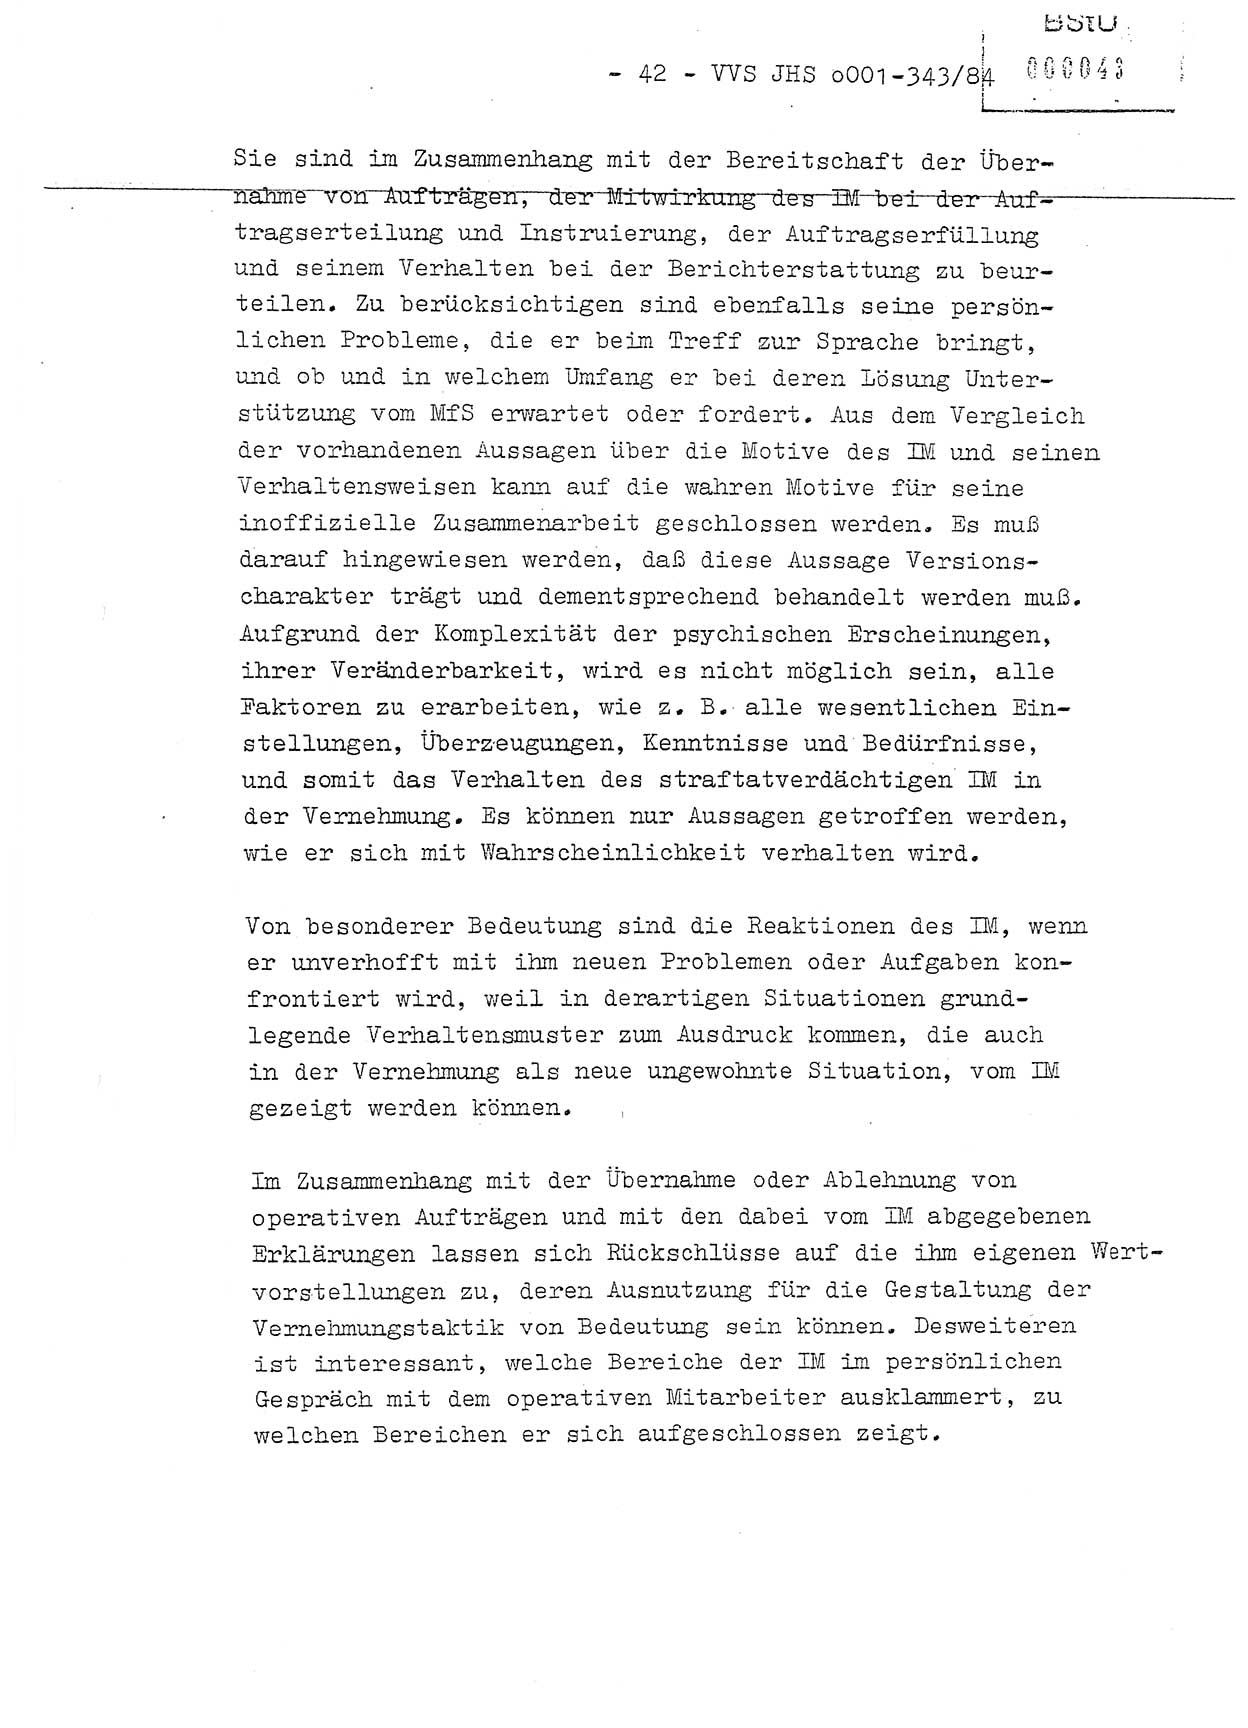 Diplomarbeit, Oberleutnant Bernd Michael (HA Ⅸ/5), Oberleutnant Peter Felber (HA IX/5), Ministerium für Staatssicherheit (MfS) [Deutsche Demokratische Republik (DDR)], Juristische Hochschule (JHS), Vertrauliche Verschlußsache (VVS) o001-343/84, Potsdam 1985, Seite 42 (Dipl.-Arb. MfS DDR JHS VVS o001-343/84 1985, S. 42)